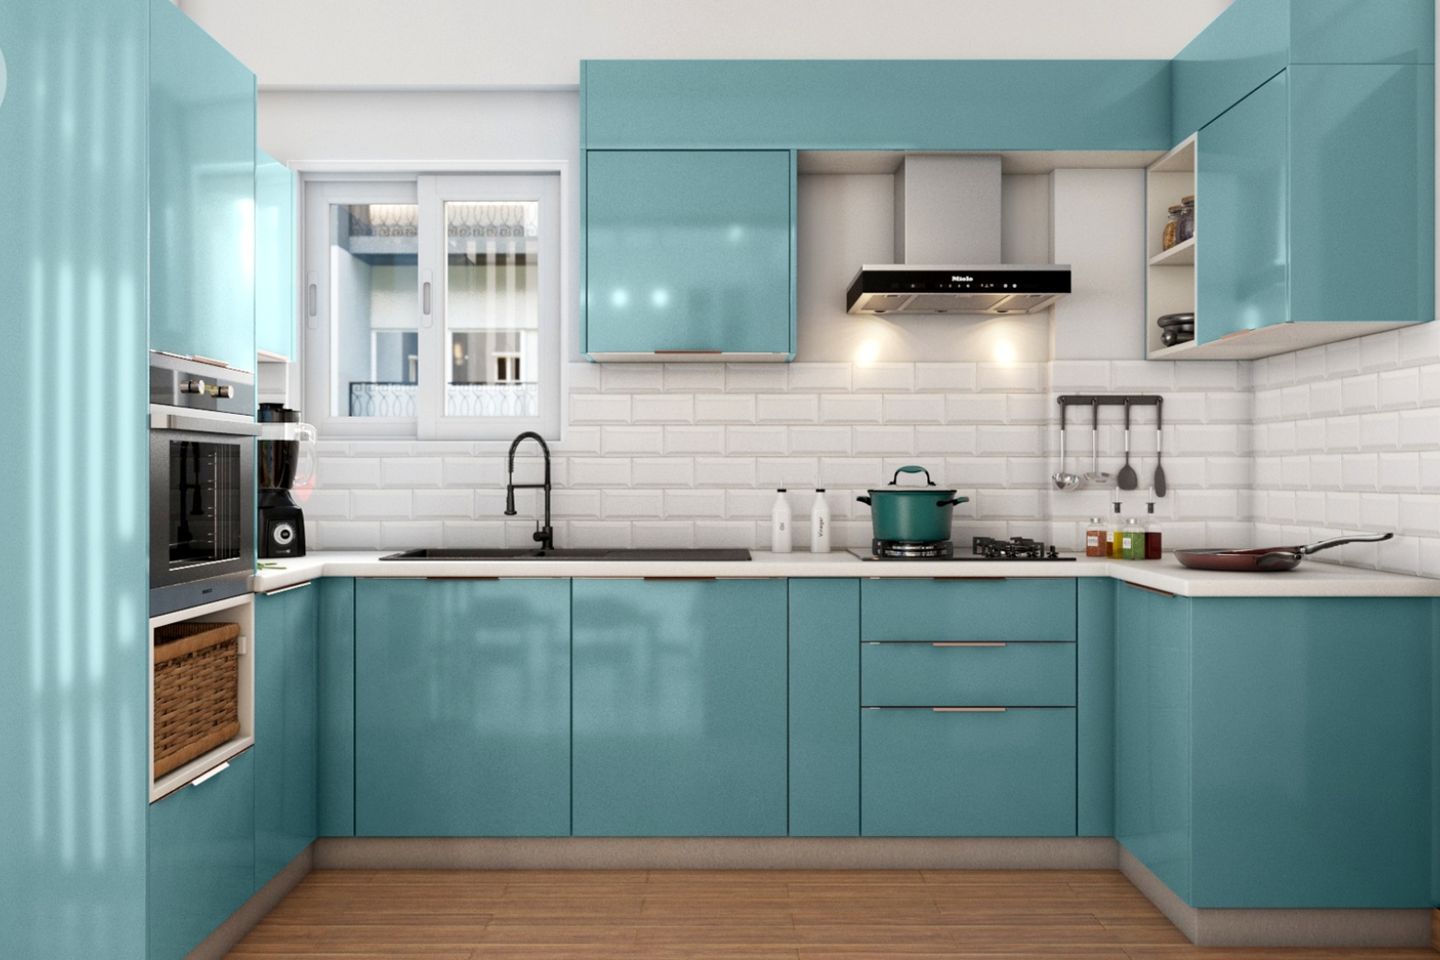 12X10 Ft U-Shaped Kitchen Design With Drawer Storage - Livspace